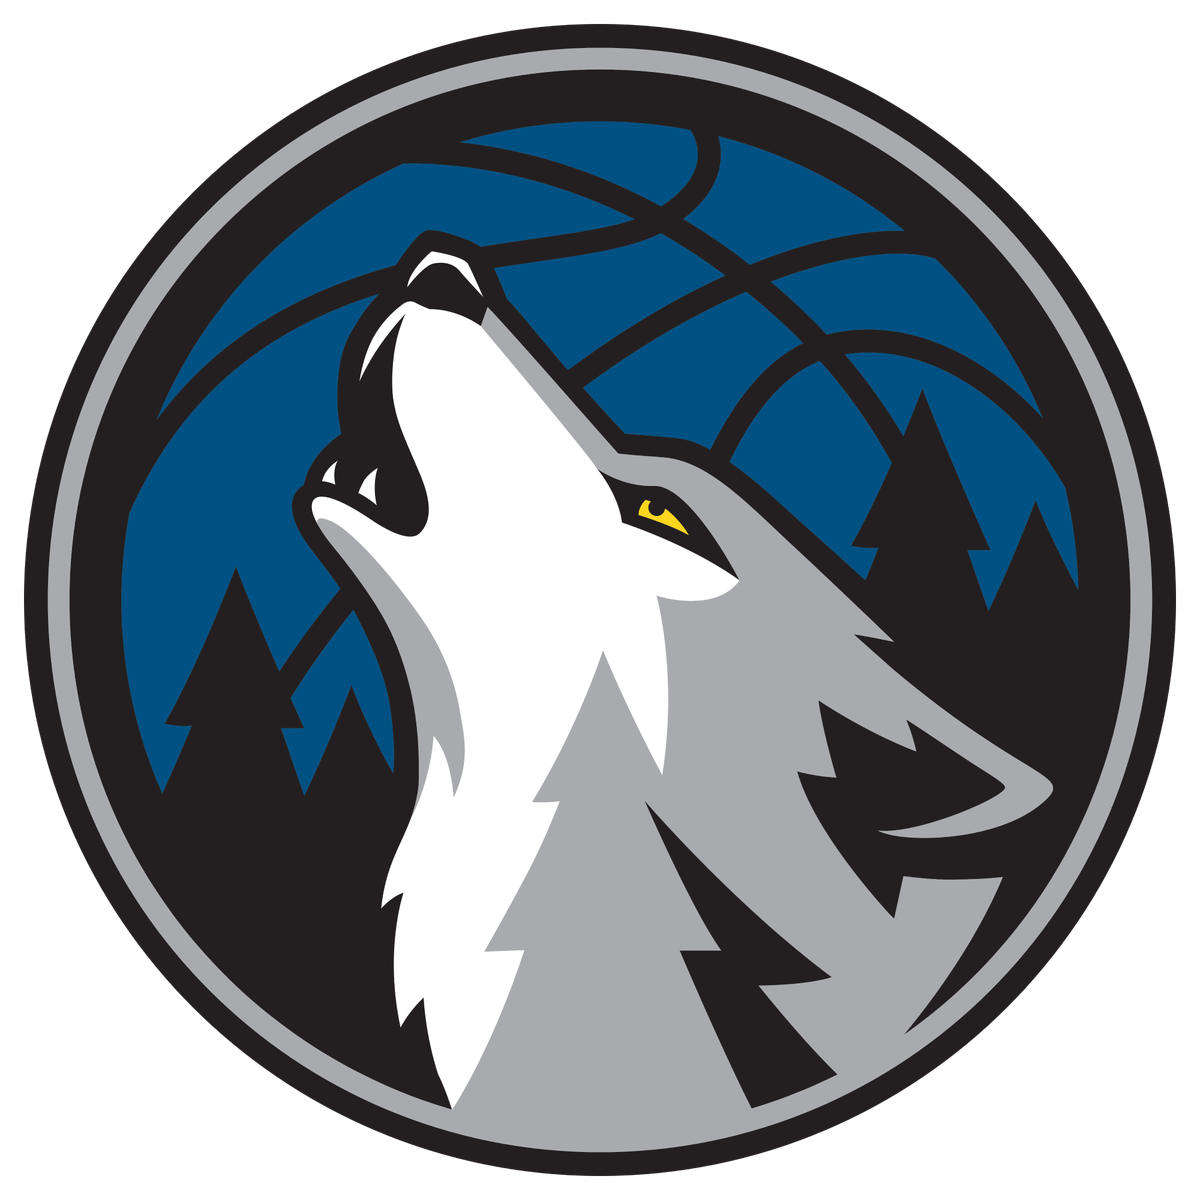 Twolves Logo - Minnesota Timberwolves officially unveil new logo - SBNation.com